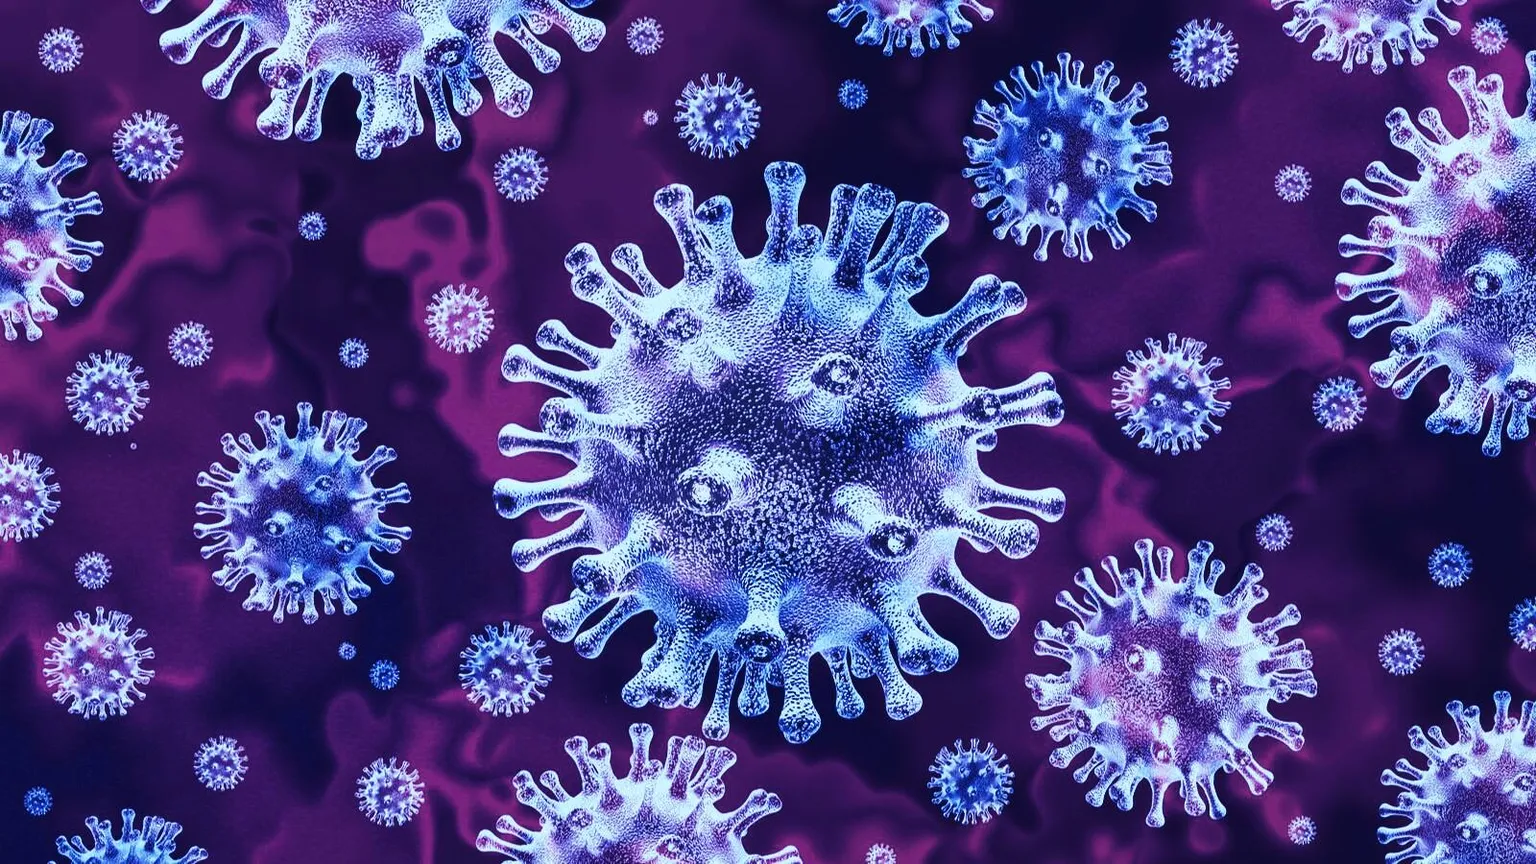 Binance helps in the fight against Coronavirus as it donates $3 million. Image: Shutterstock